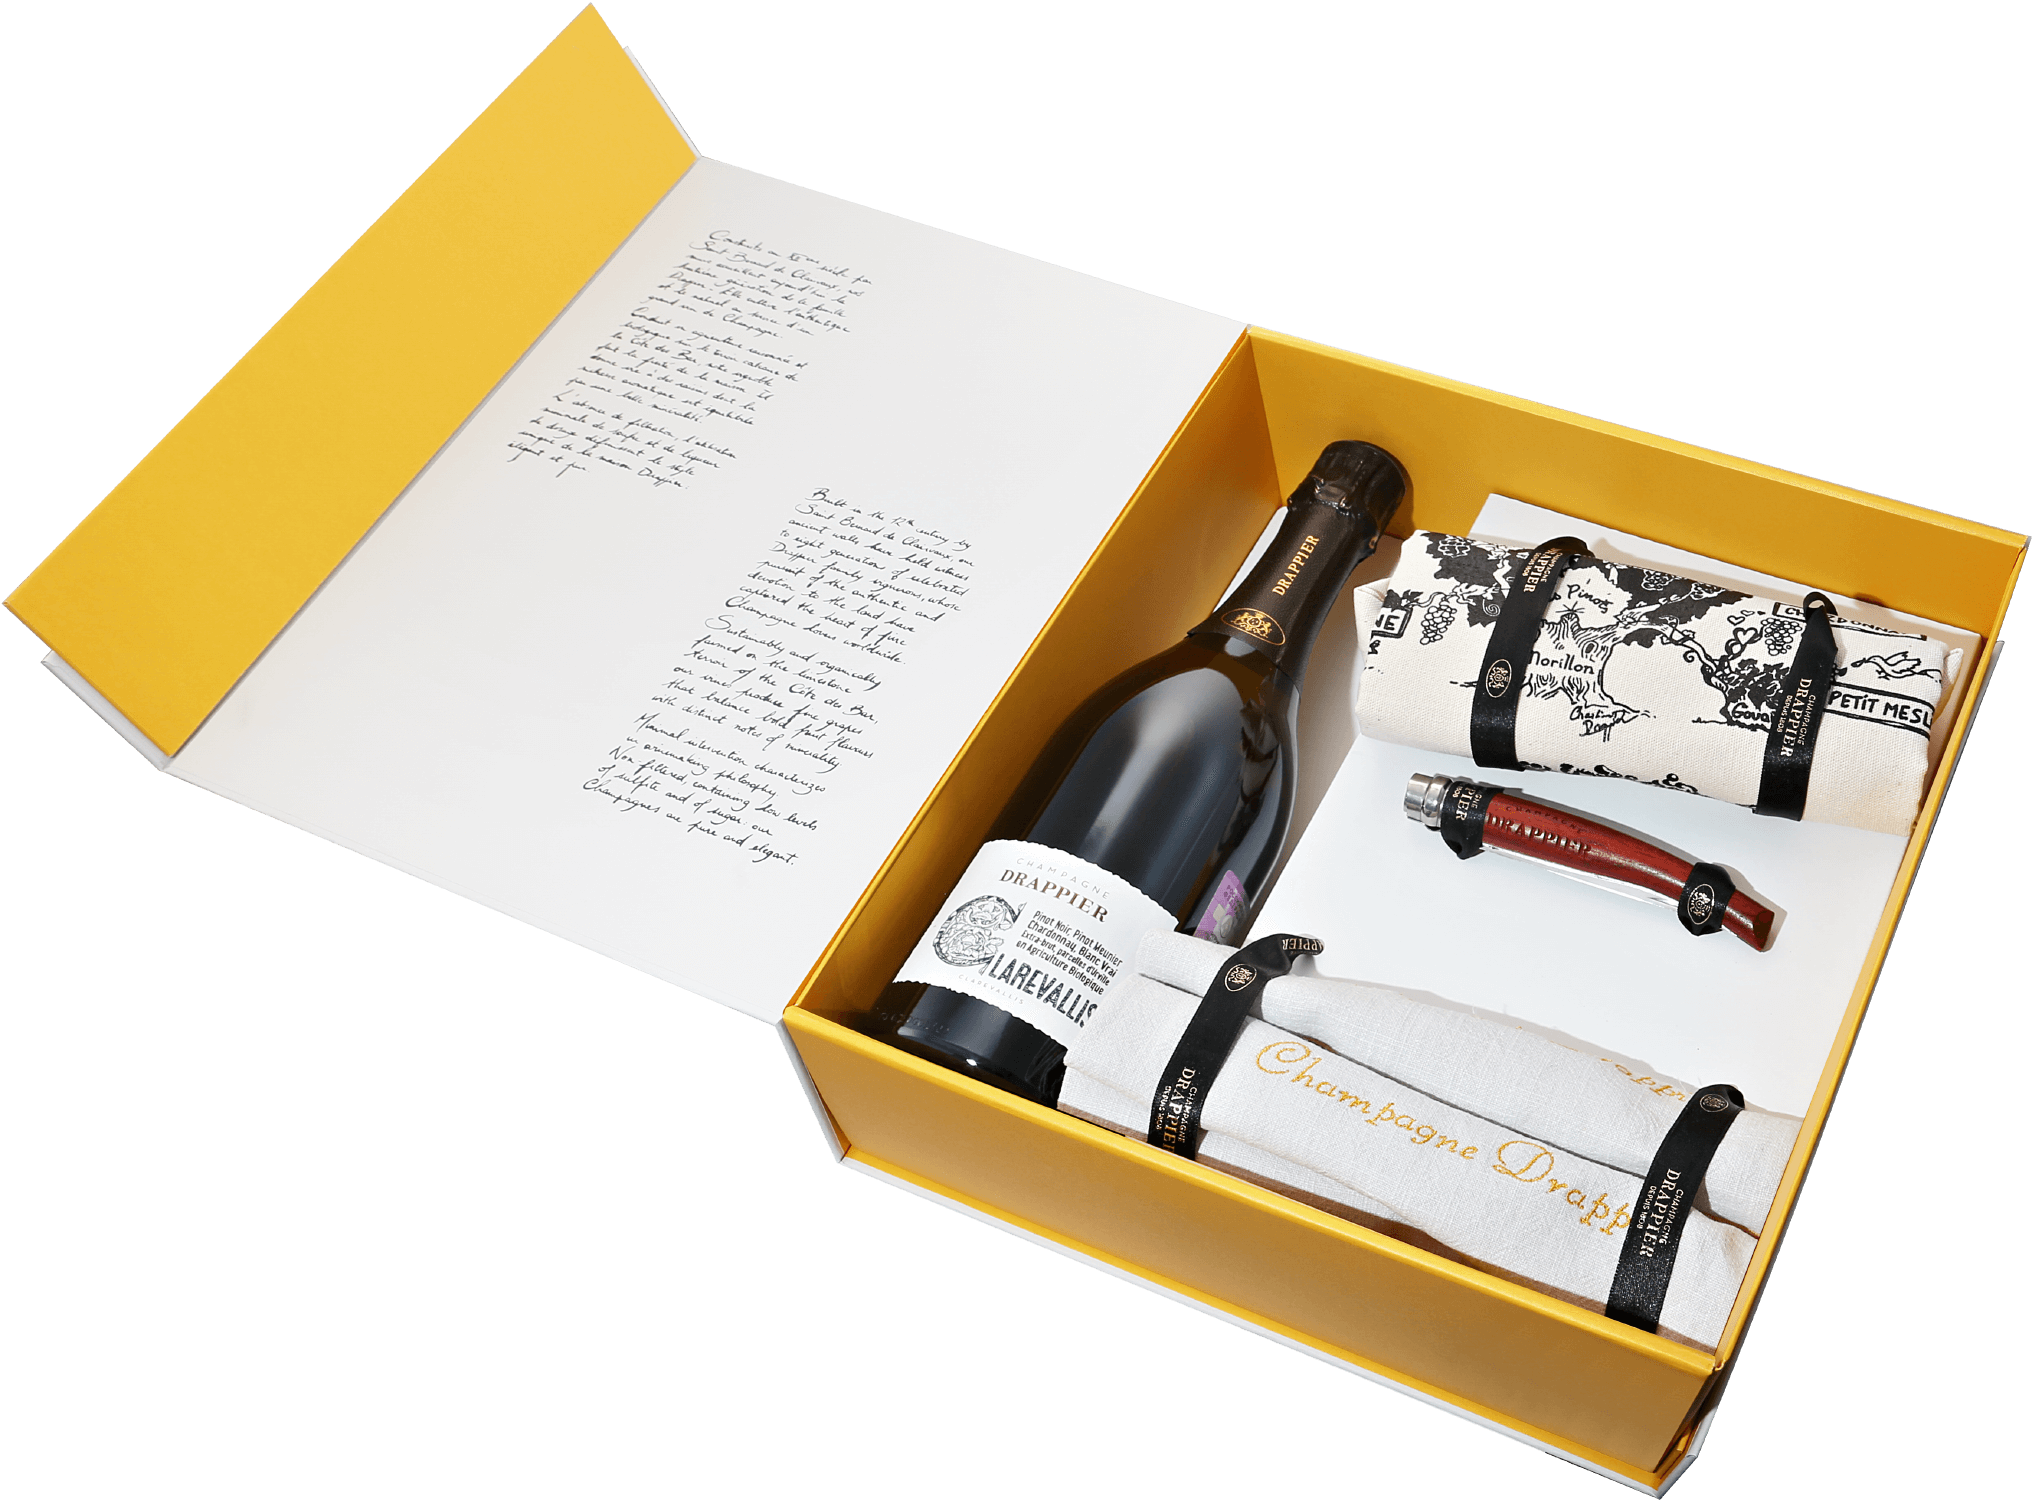 Drappier Clarevallis Champagne AOC (gift box) carte blanche champagne aoc louis roederer gift box